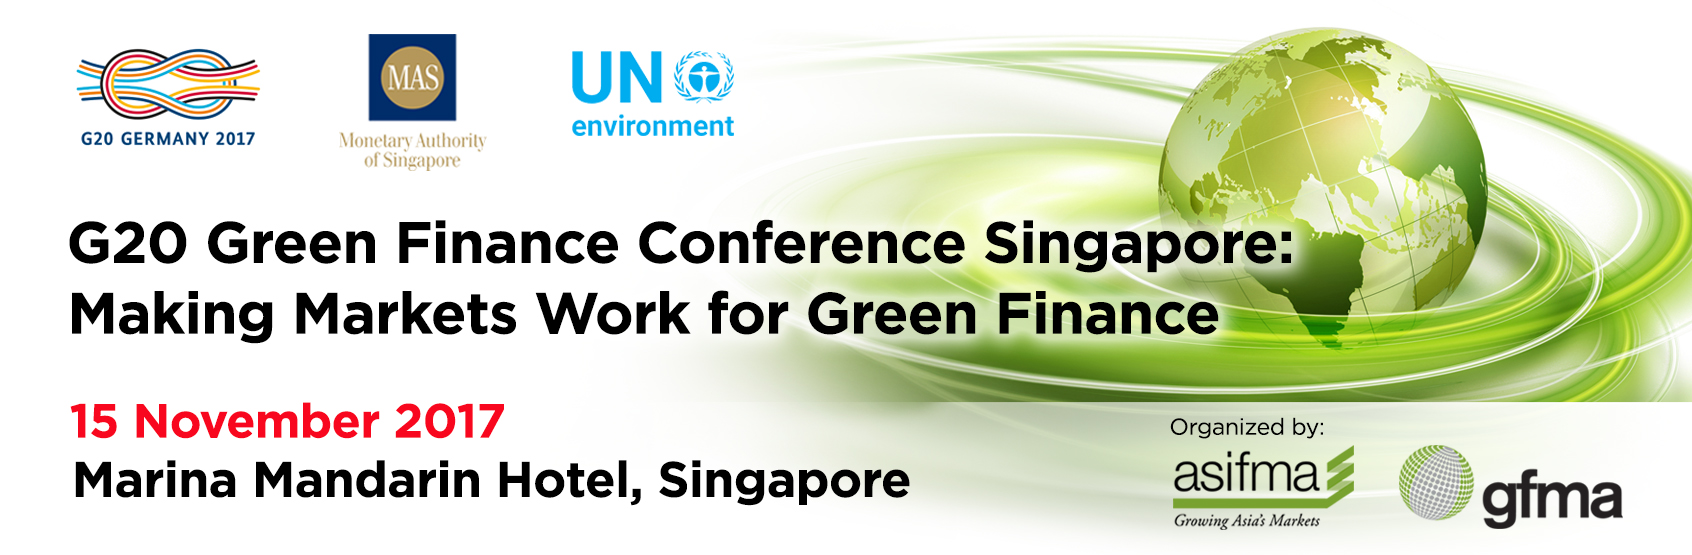 green-finance-event-branding_high-res_1692x555_v3